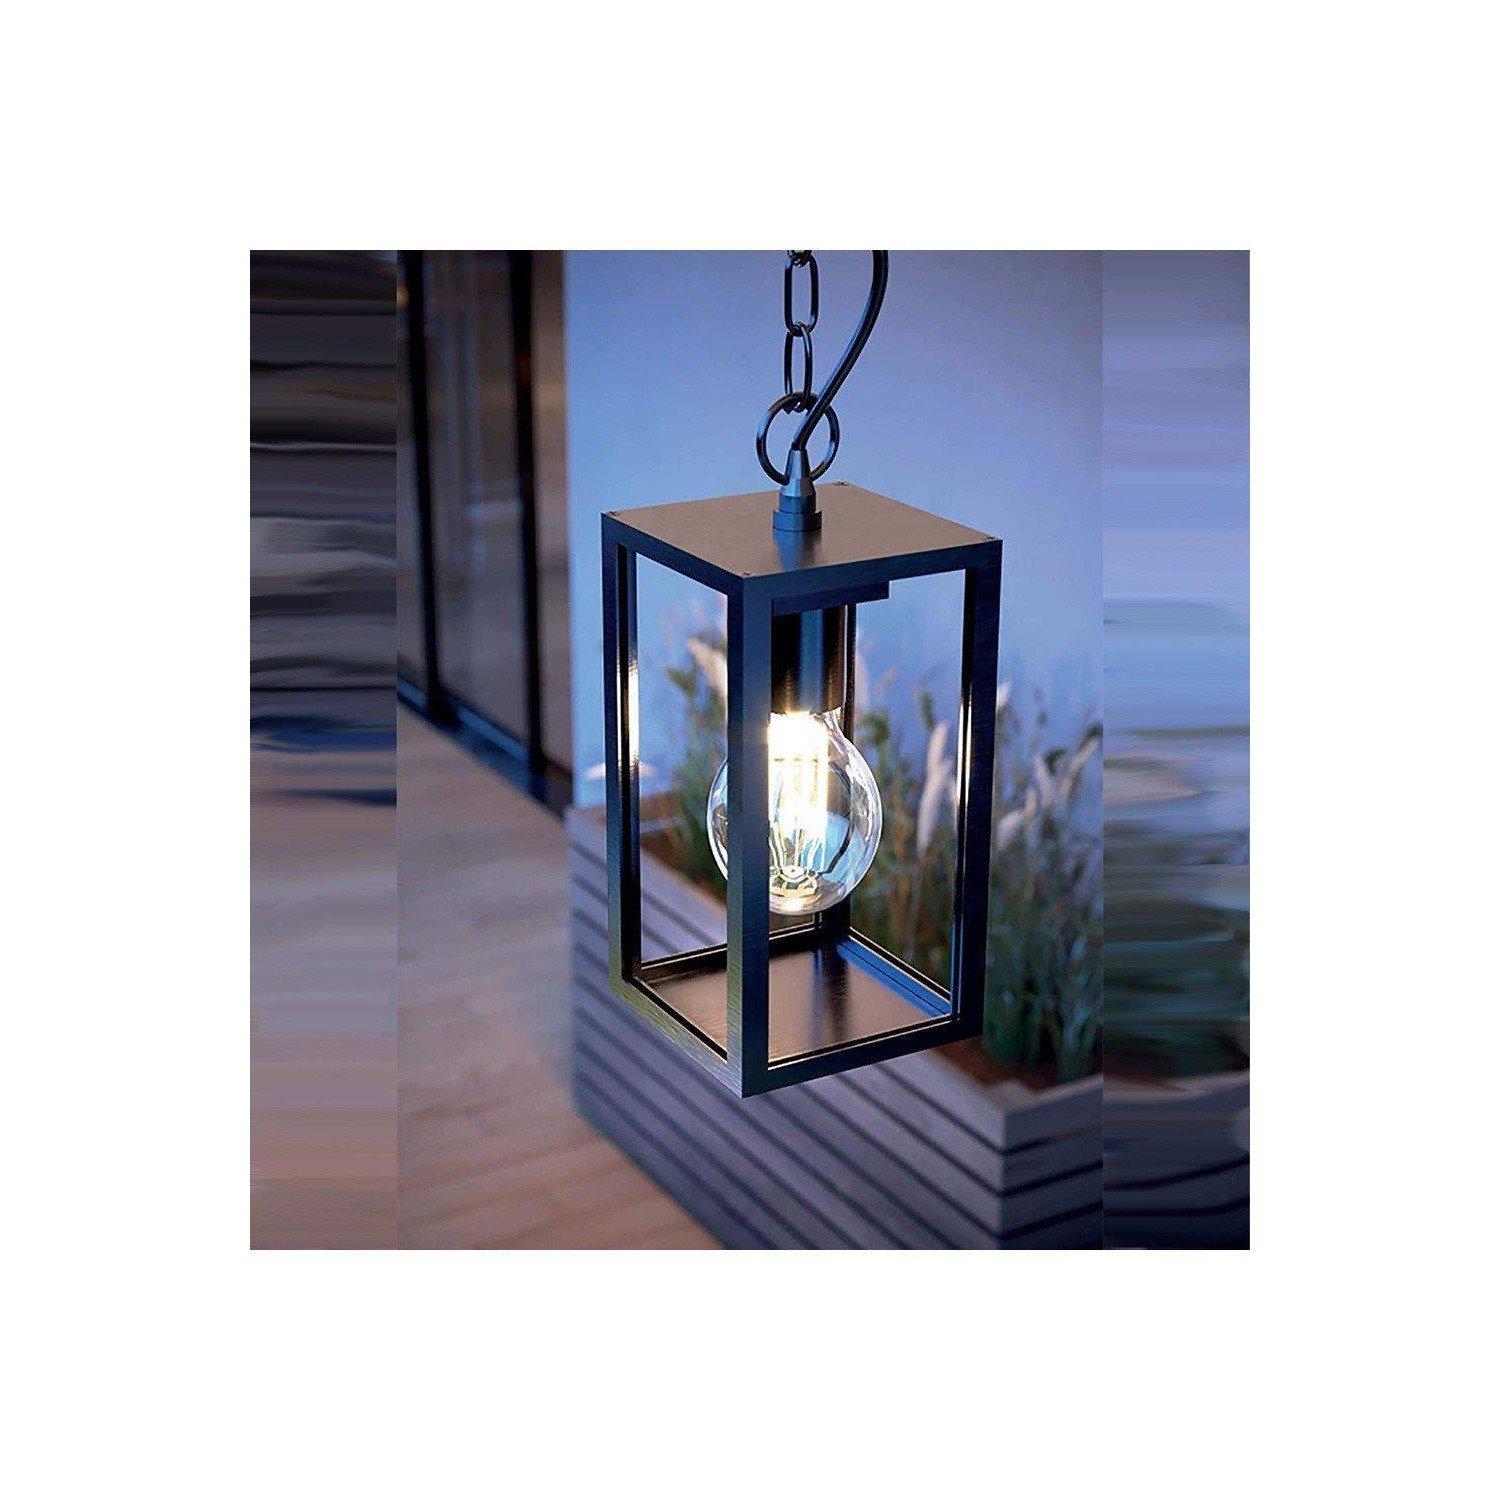 'Sienna' Black Hanging Outdoor Porch Lantern Ceiling Light - image 1